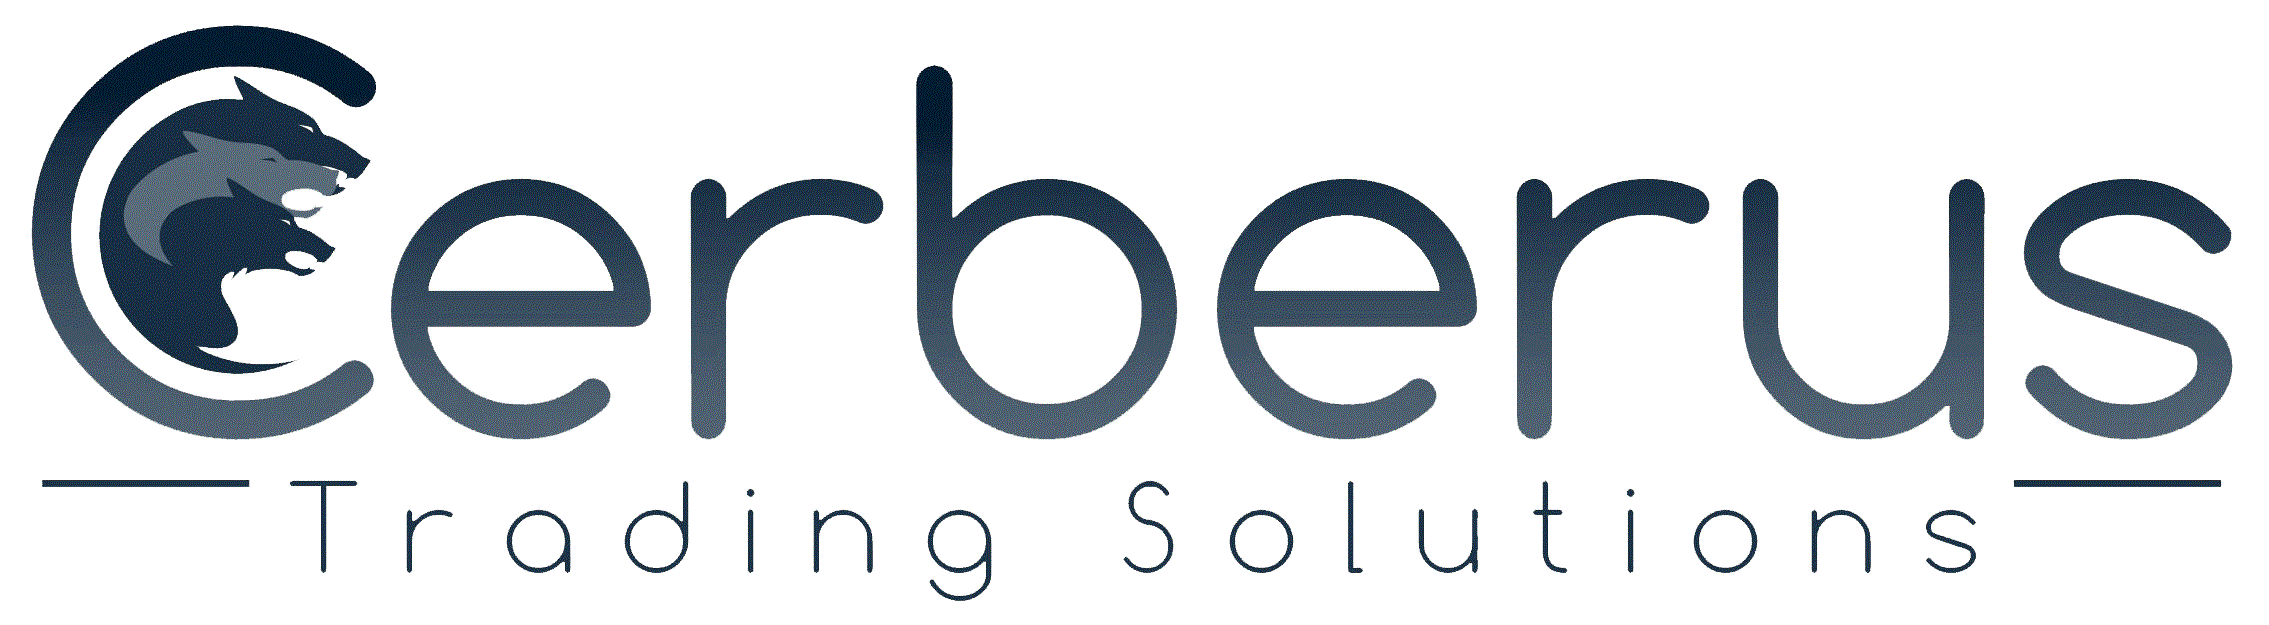 Cerberus Trading Solutions logo